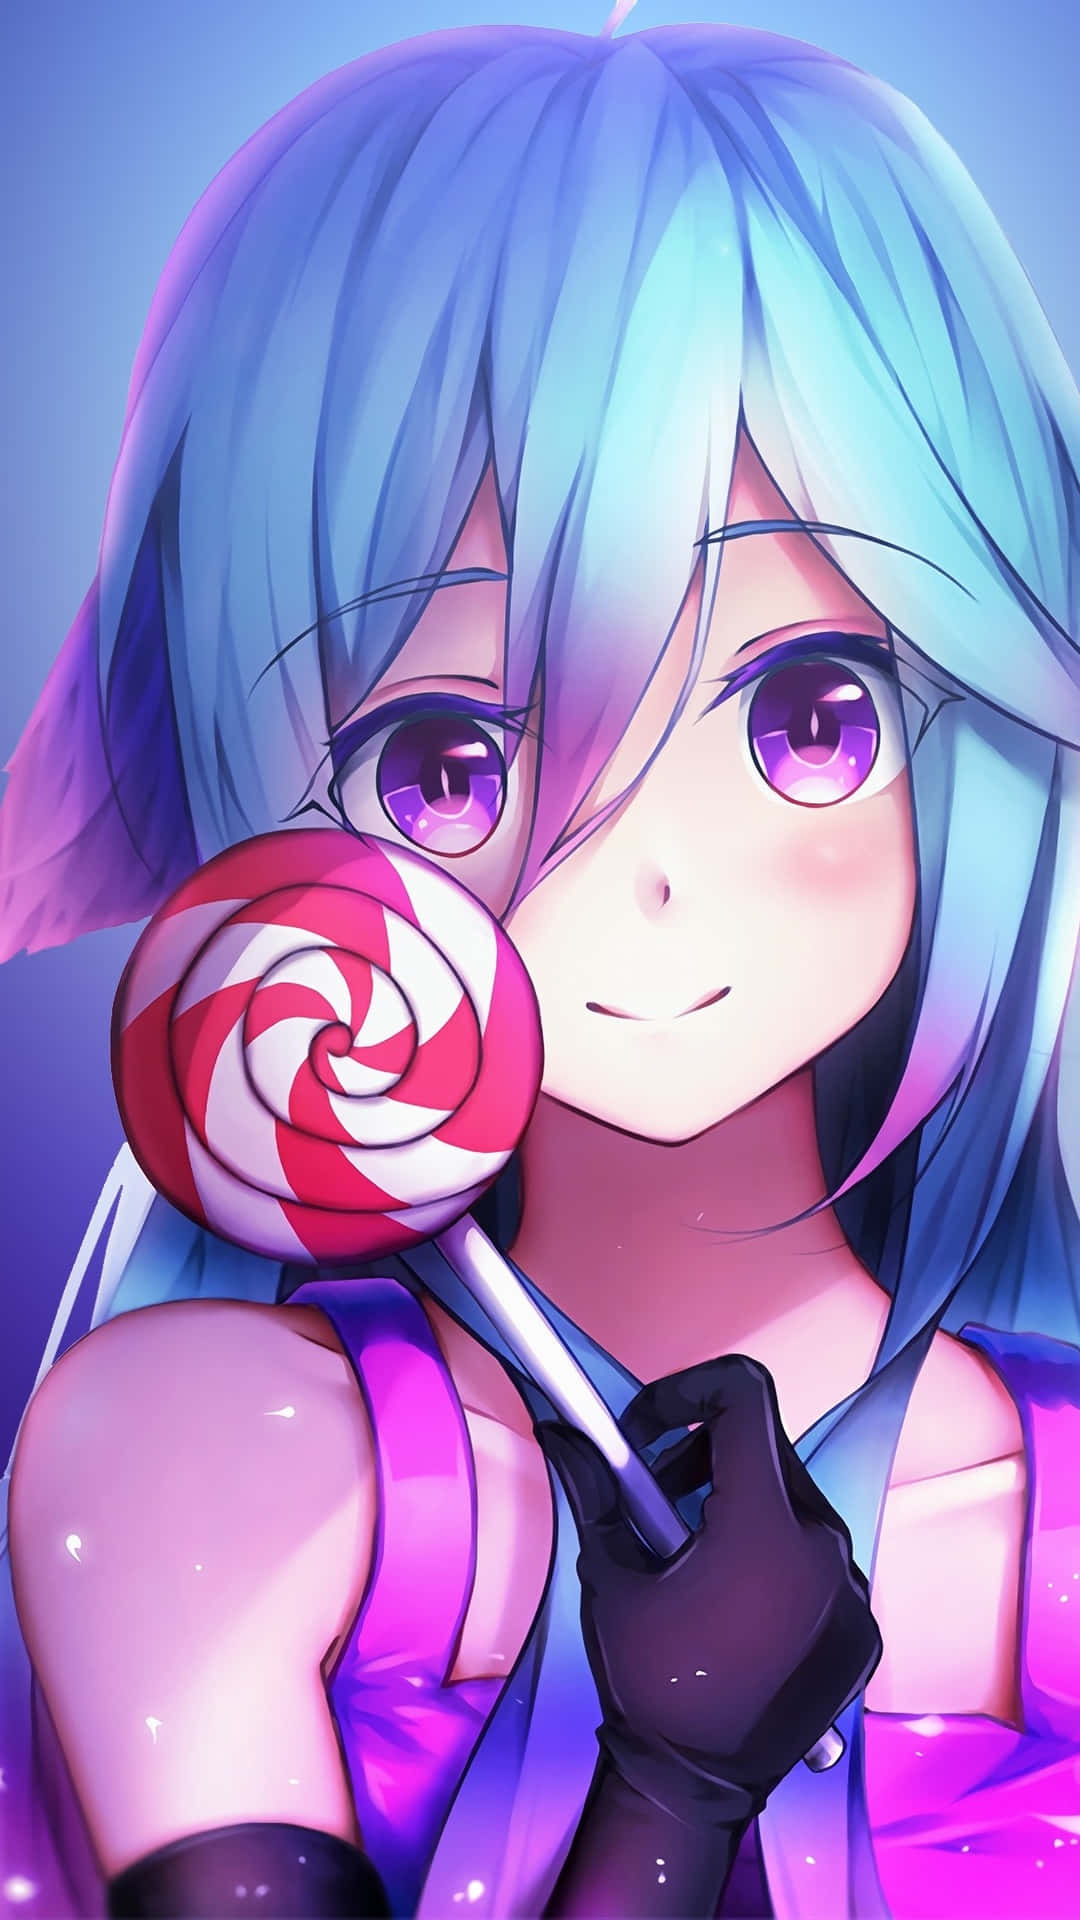 Cute Kawaii Anime Girl With Lollipop Wallpaper